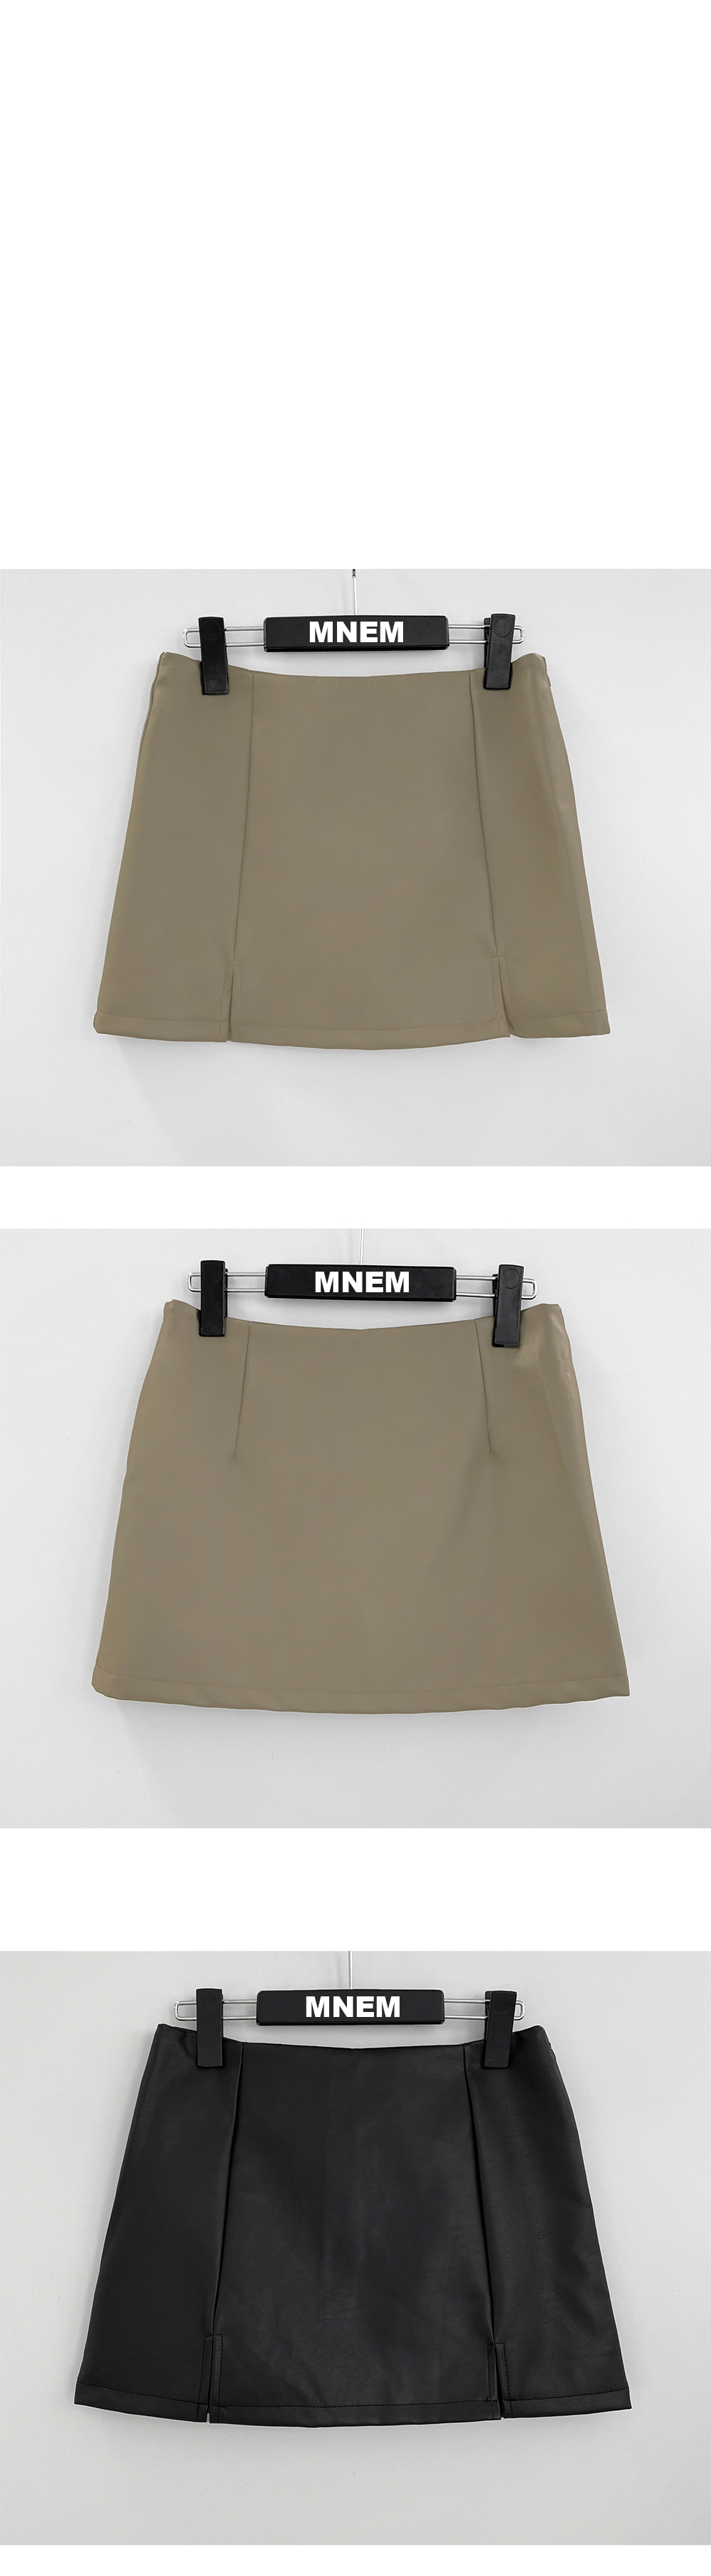 mini skirt oatmeal color image-S2L1